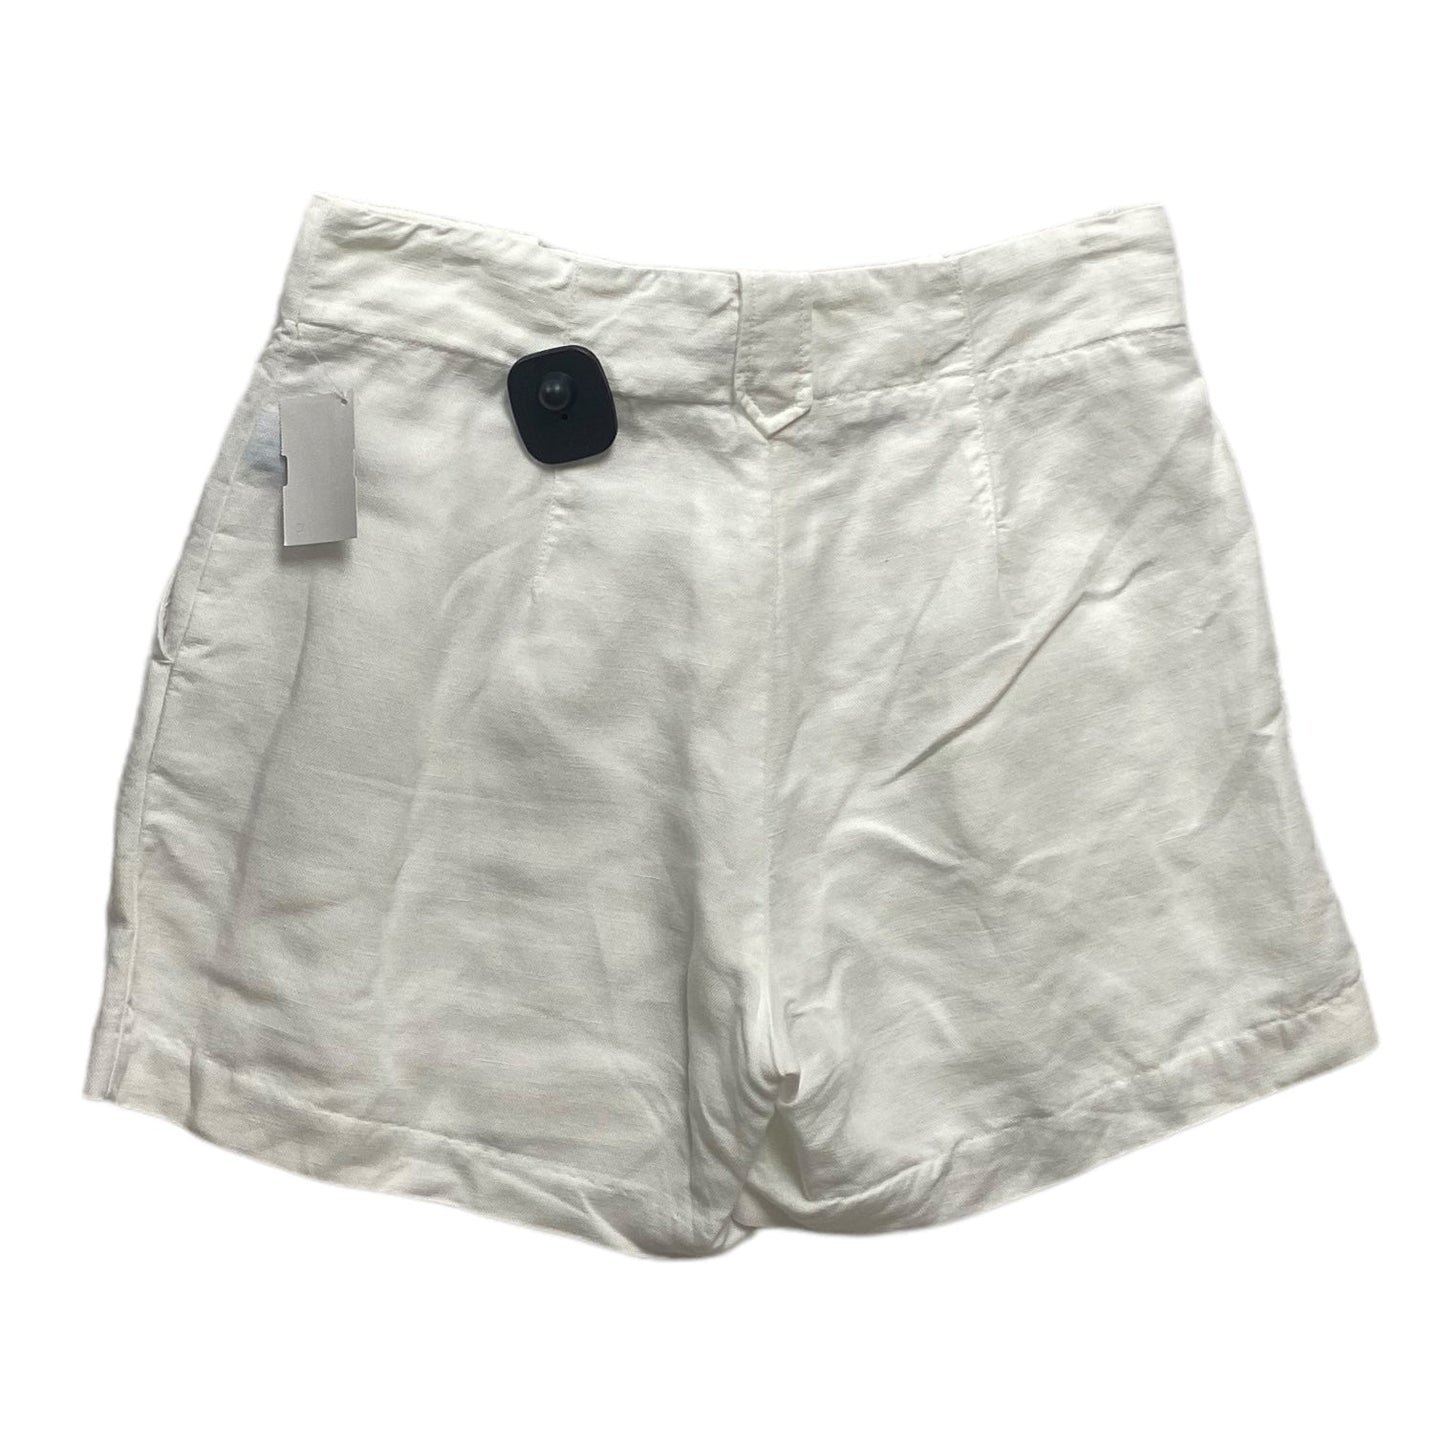 White Shorts J Mclaughlin, Size 4